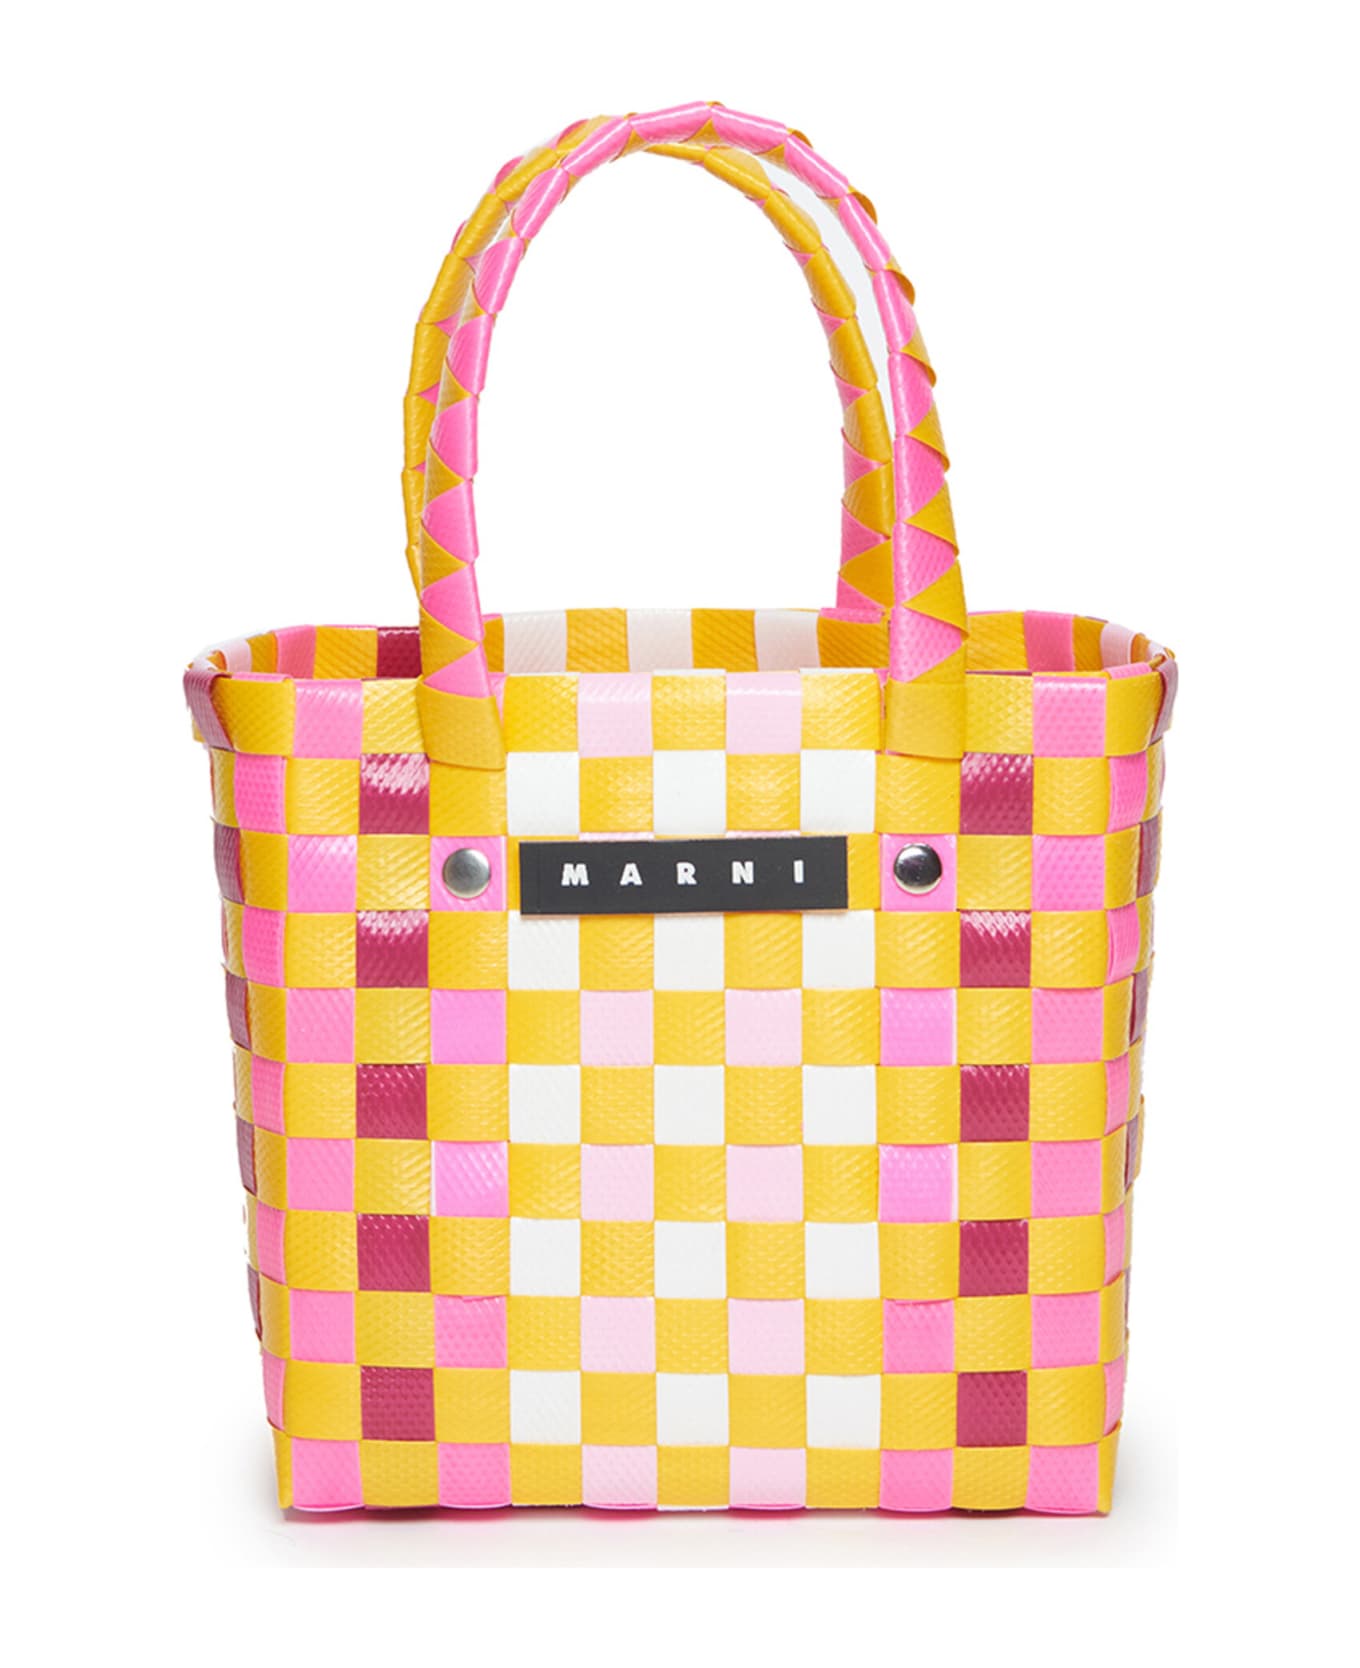 Marni Mw55f Micro Basket Bag Bags Marni Fluo Pink Woven Micro Basket Bag With Handles And Applied Logo - Pink fluo